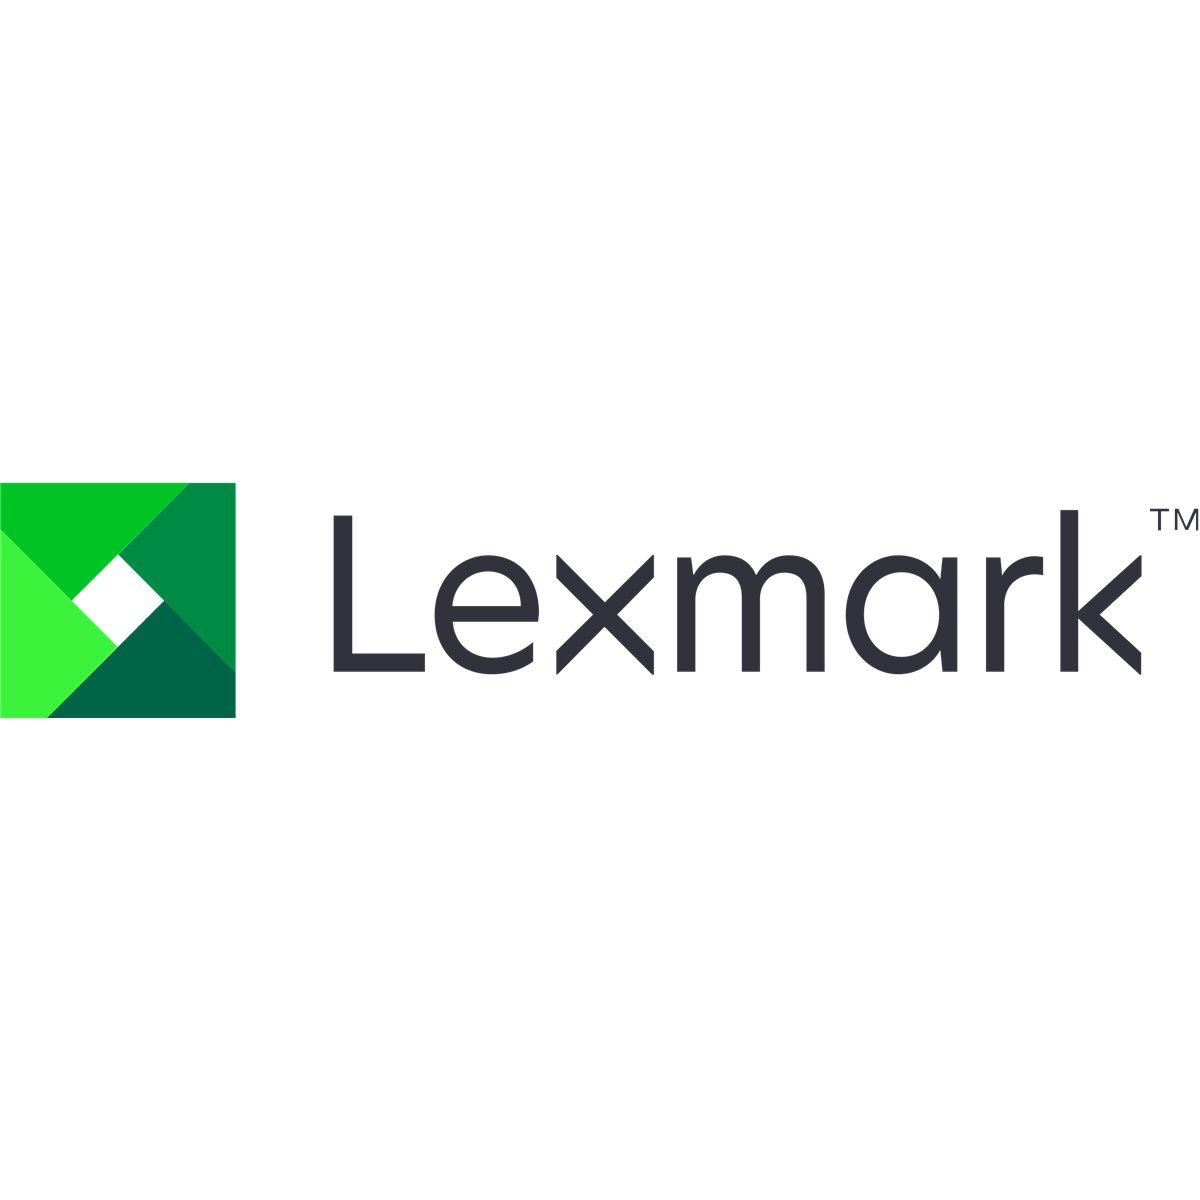 Lexmark Controller Card